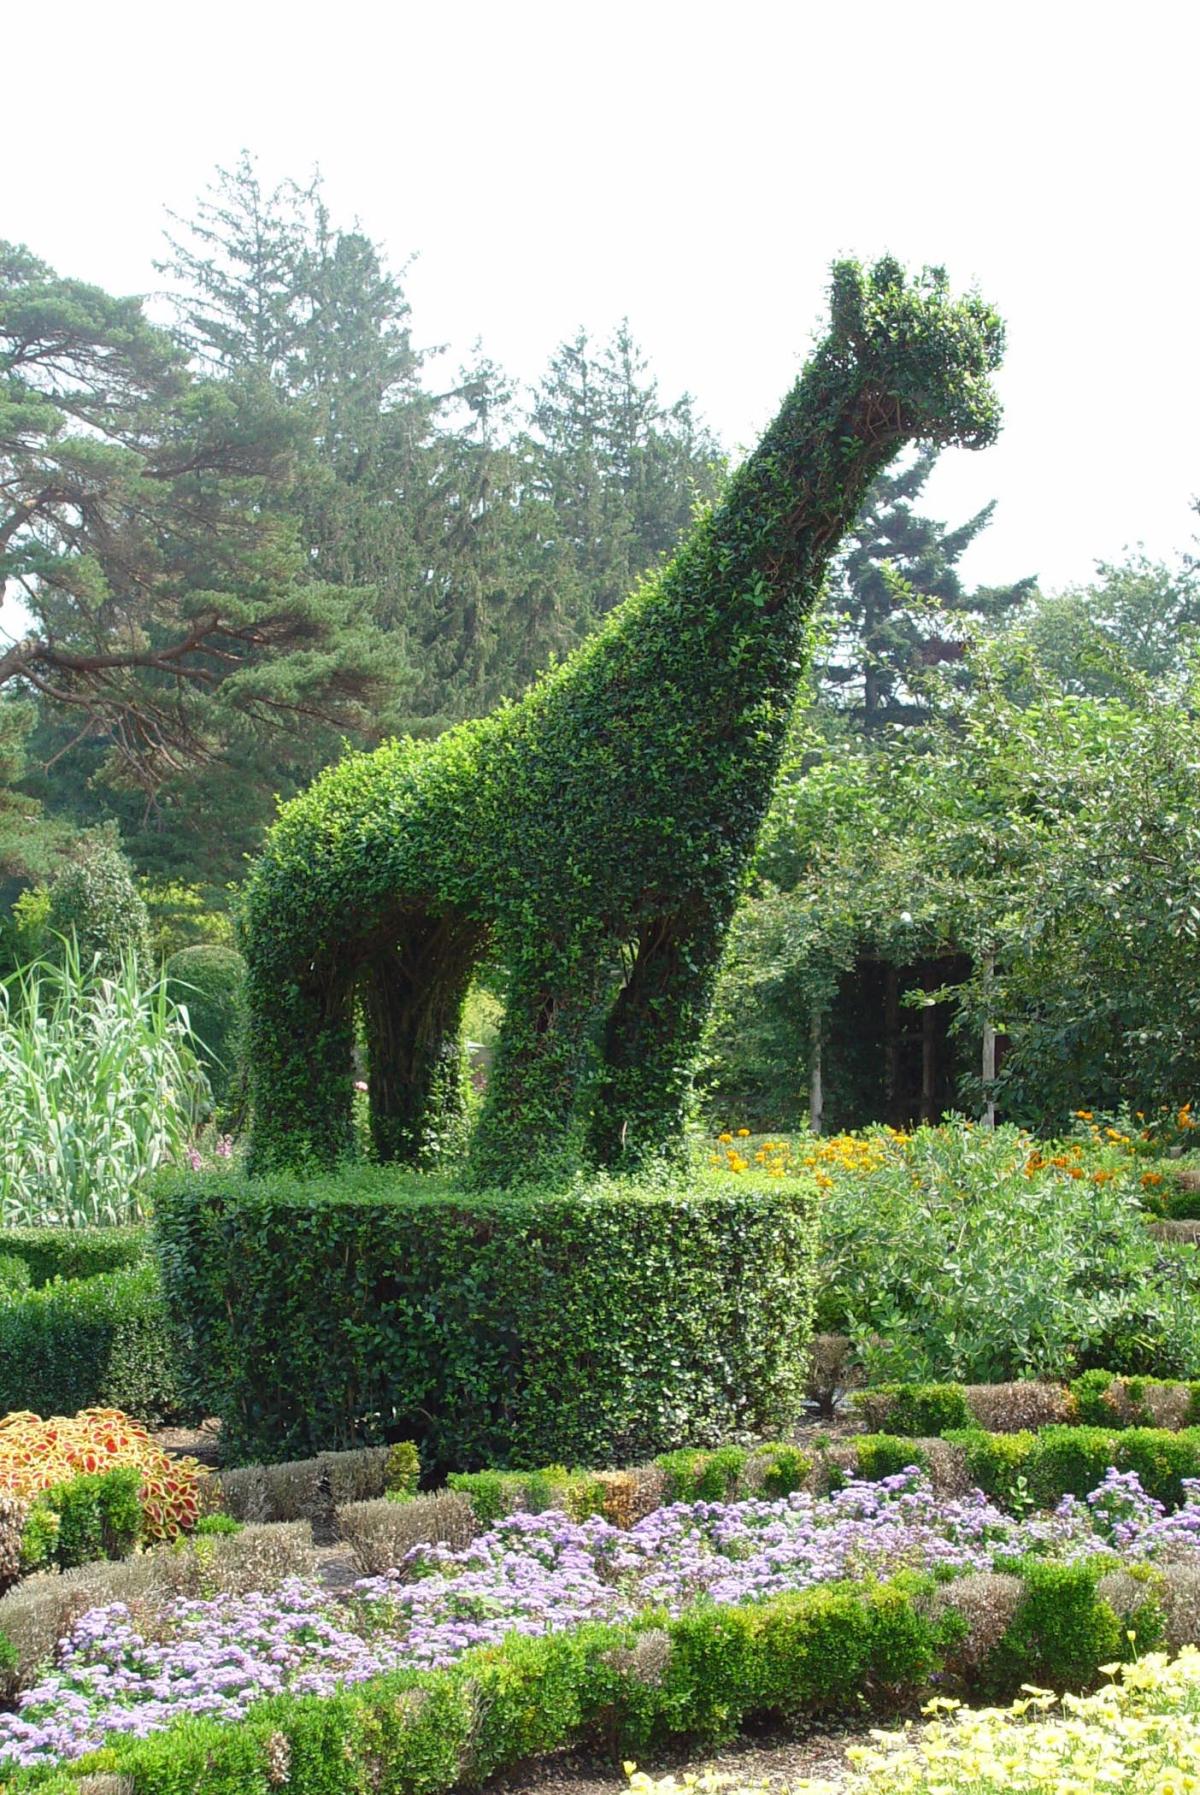 Green Animals Topiary Garden Portsmouth Ri 02871